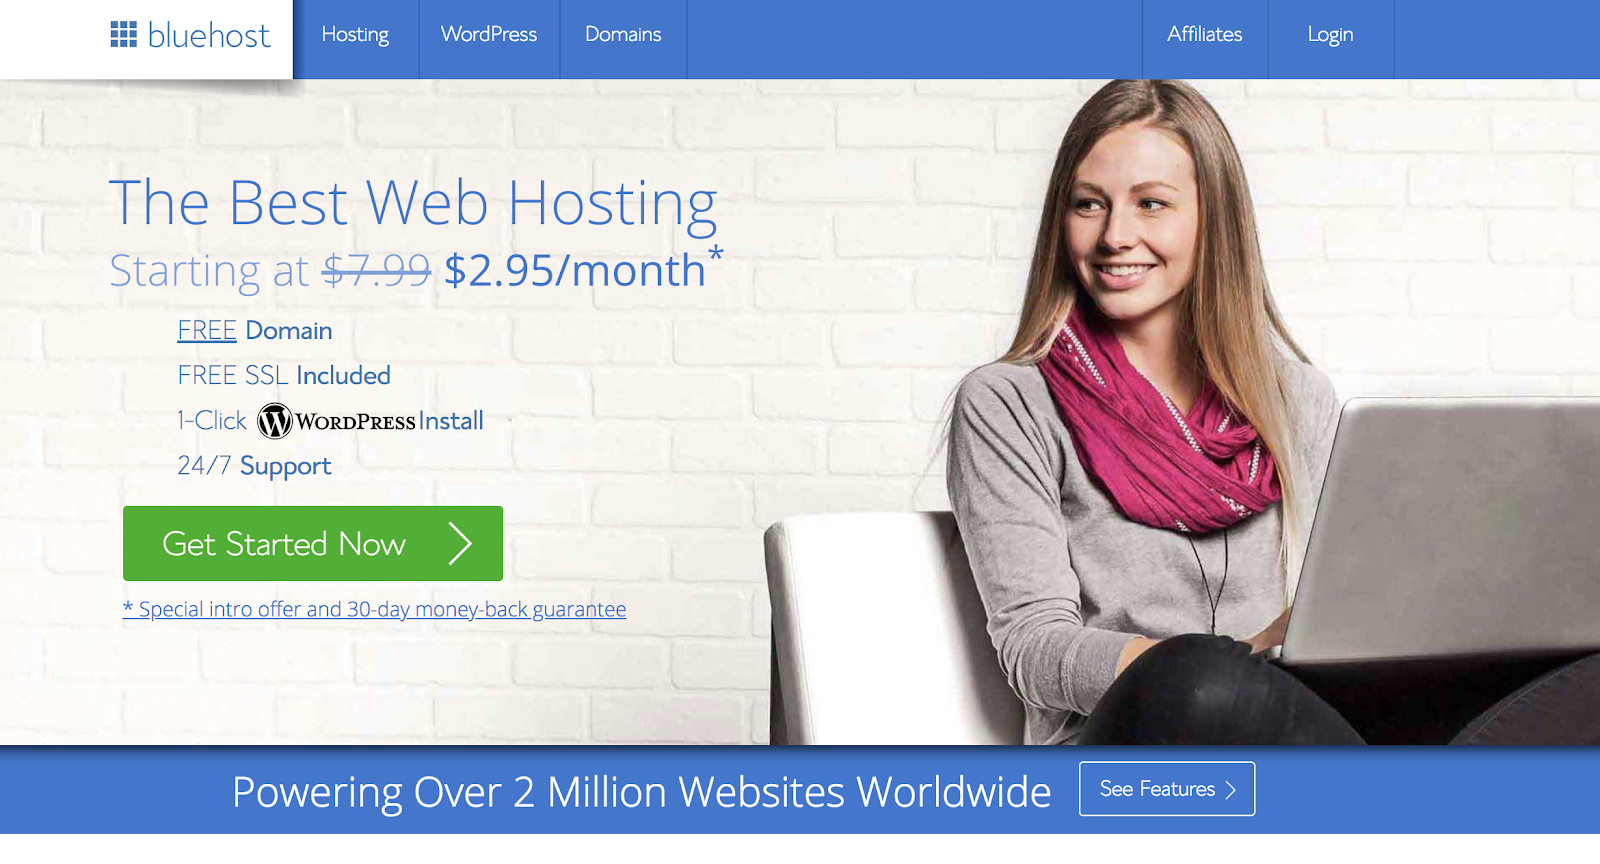 bluehost-wordpress-hosting